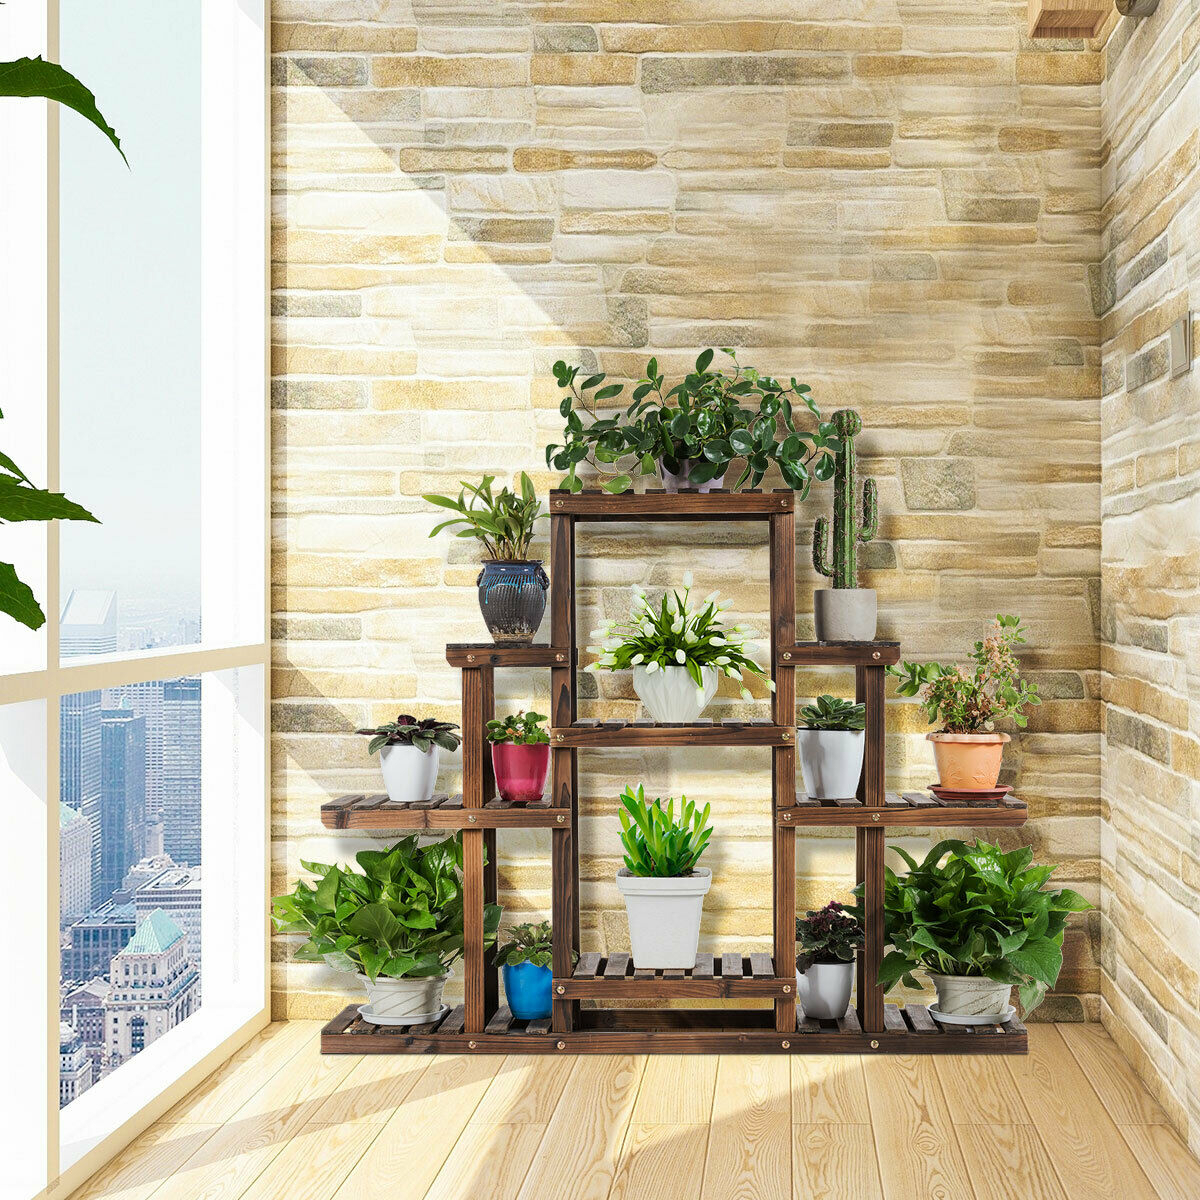 6-Tier Flower Wood Stand Plant Display Rack Multifunctional Storage Shelf